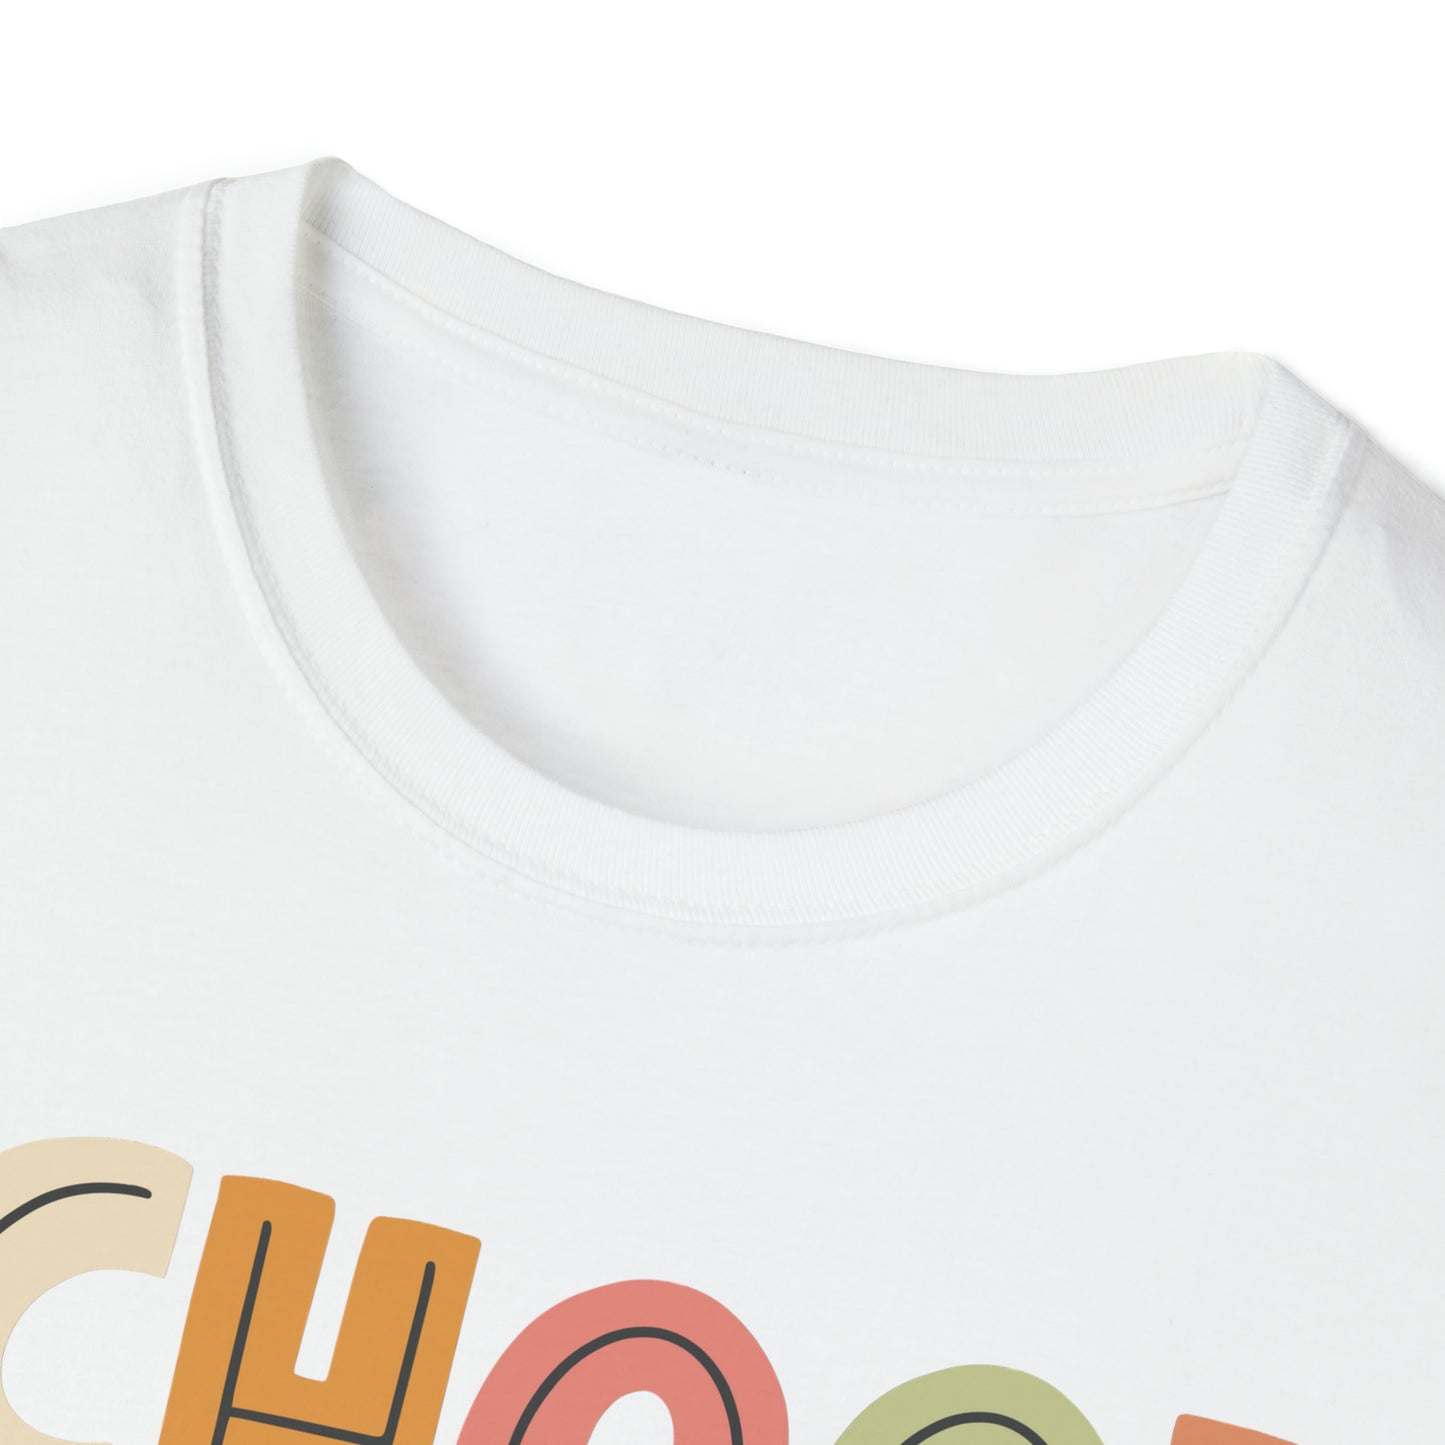 JeffCoEd Nurse Colorful Softstyle T-Shirt